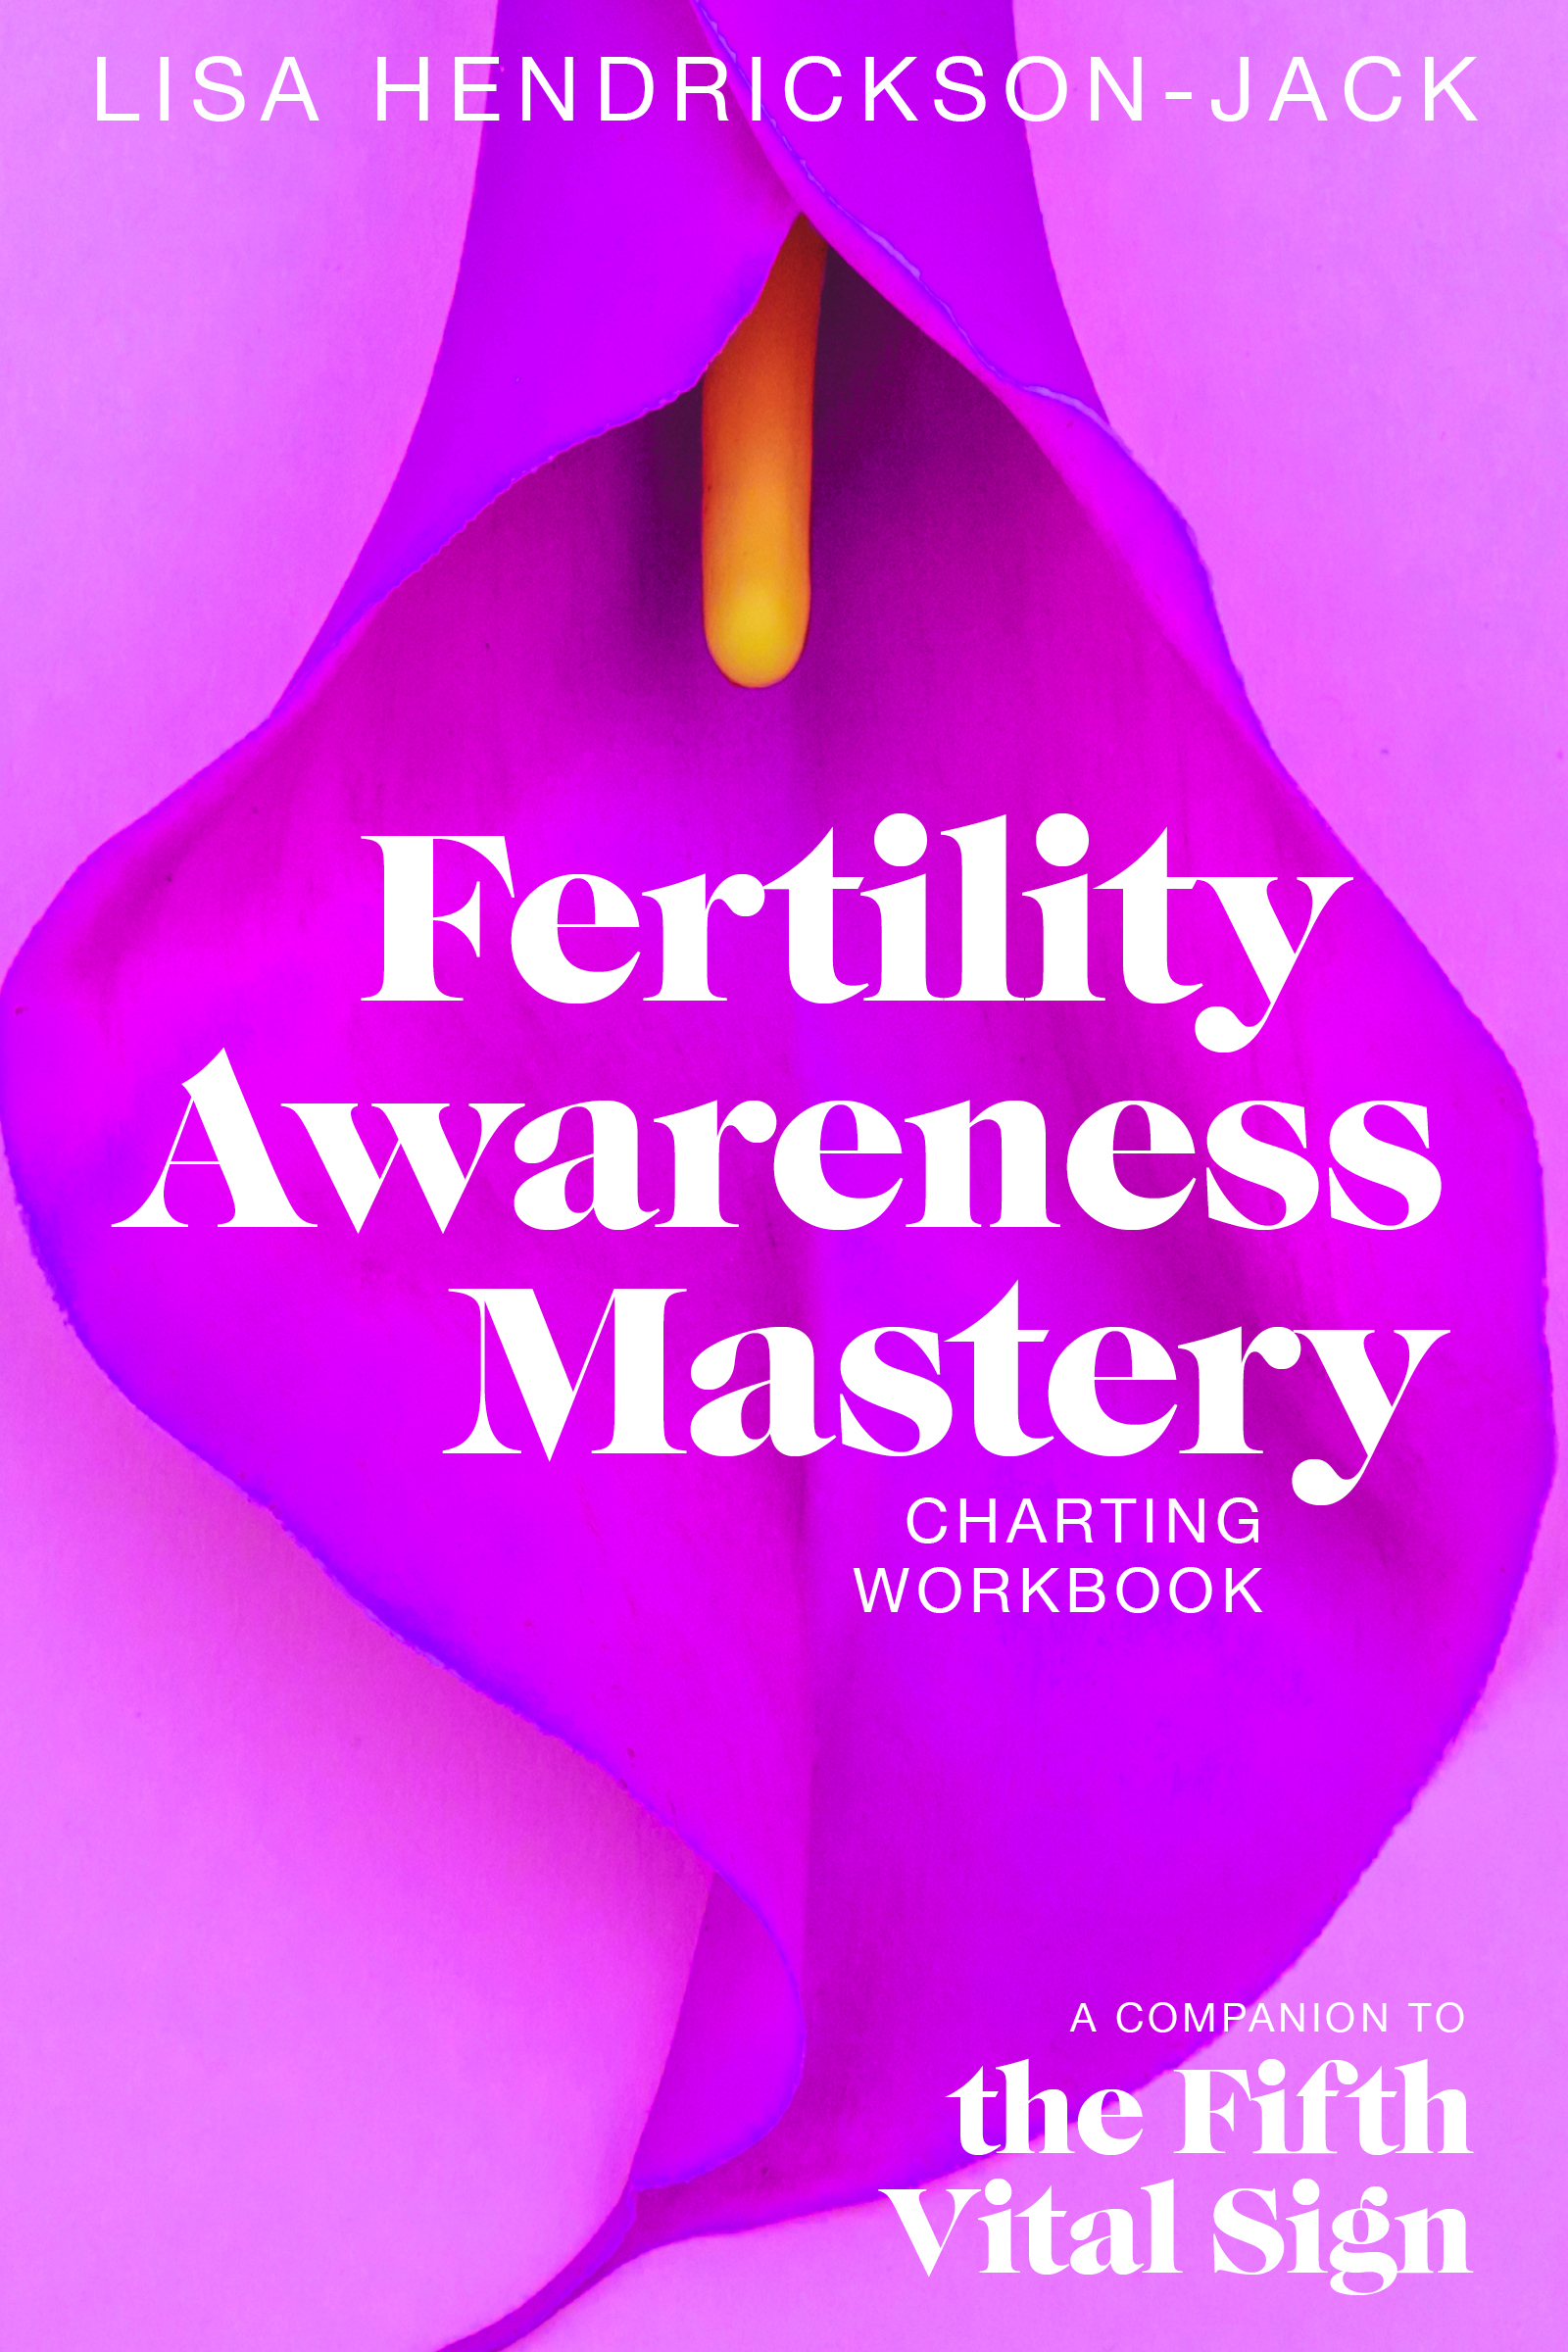 Fertility Awareness Mastery